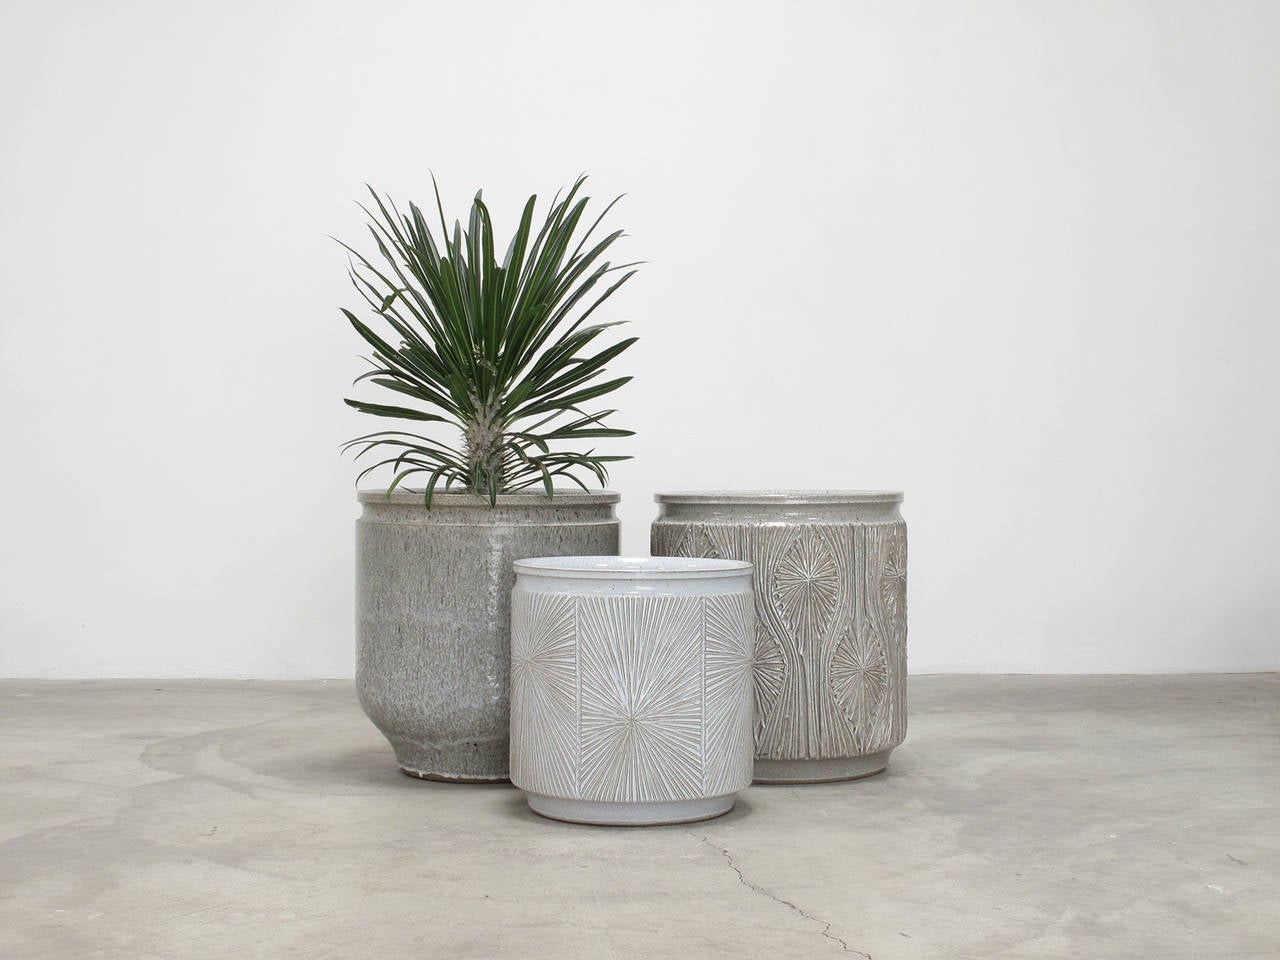 David Cressey & Robert Maxwell
Ceramic planters
California, 1970s
Earthgender Ceramics
Stoneware, glazed
